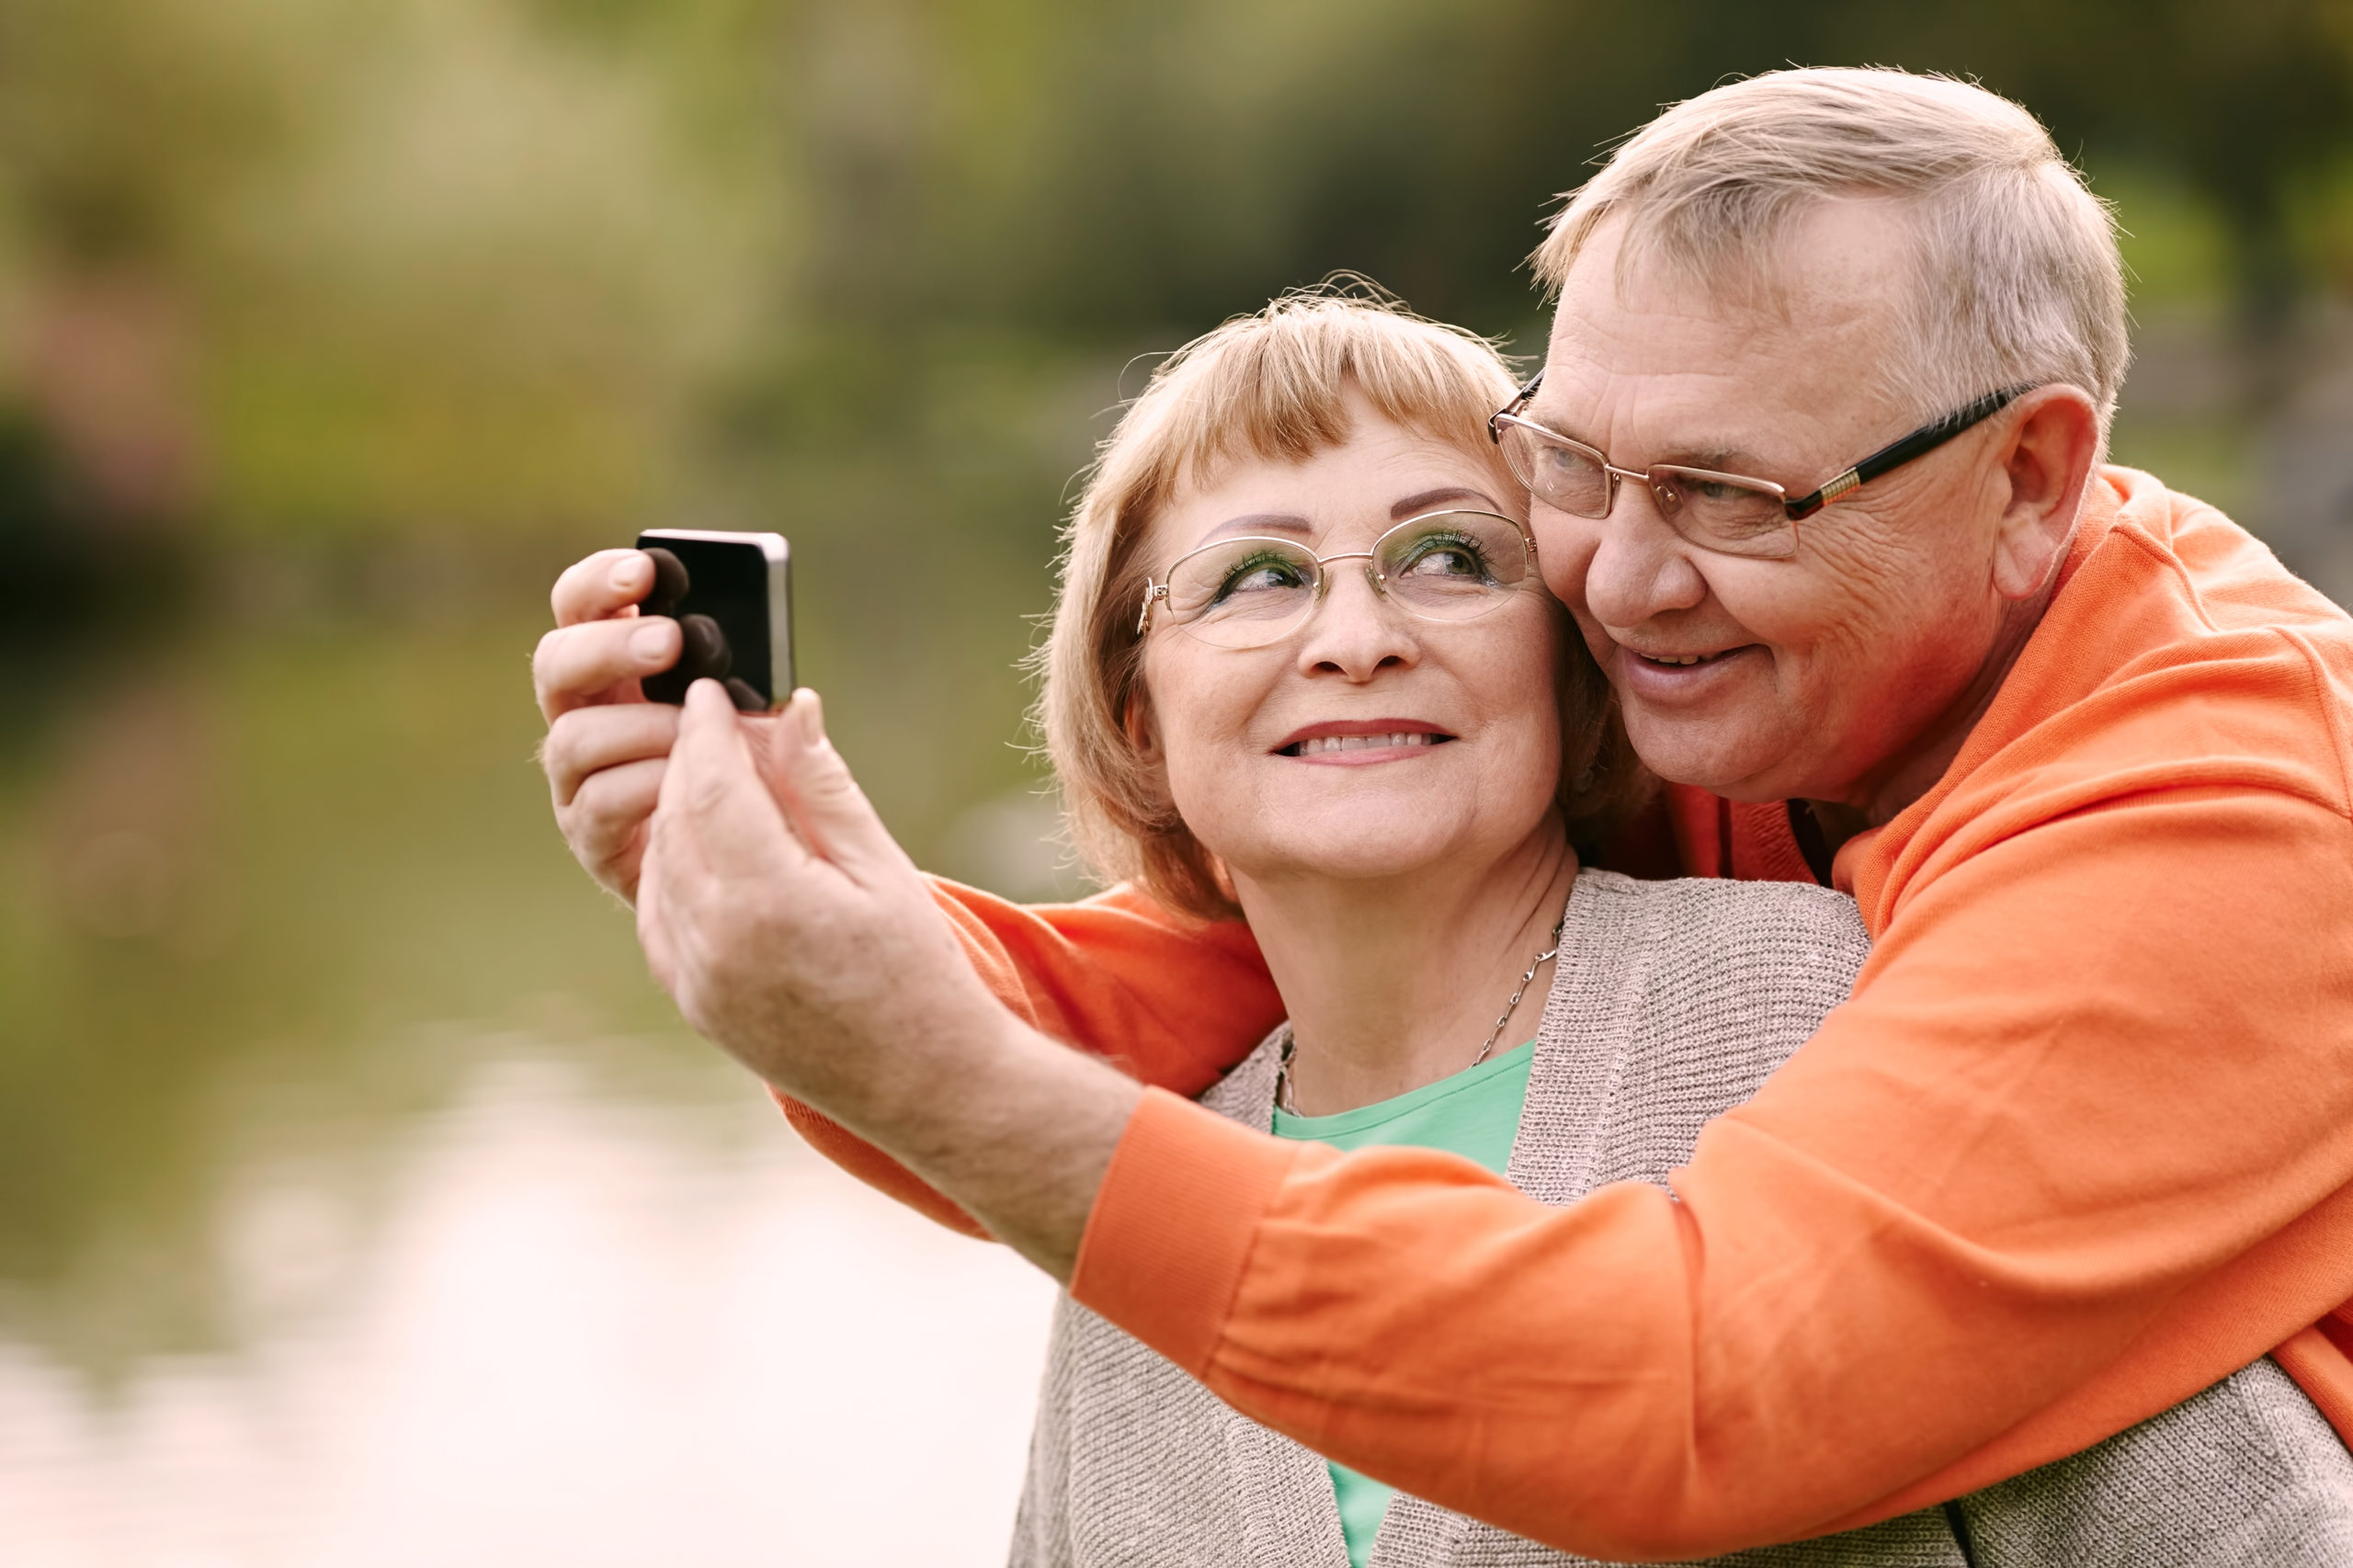 senior dating selfie shutterstock - Jacobs Media Strategies